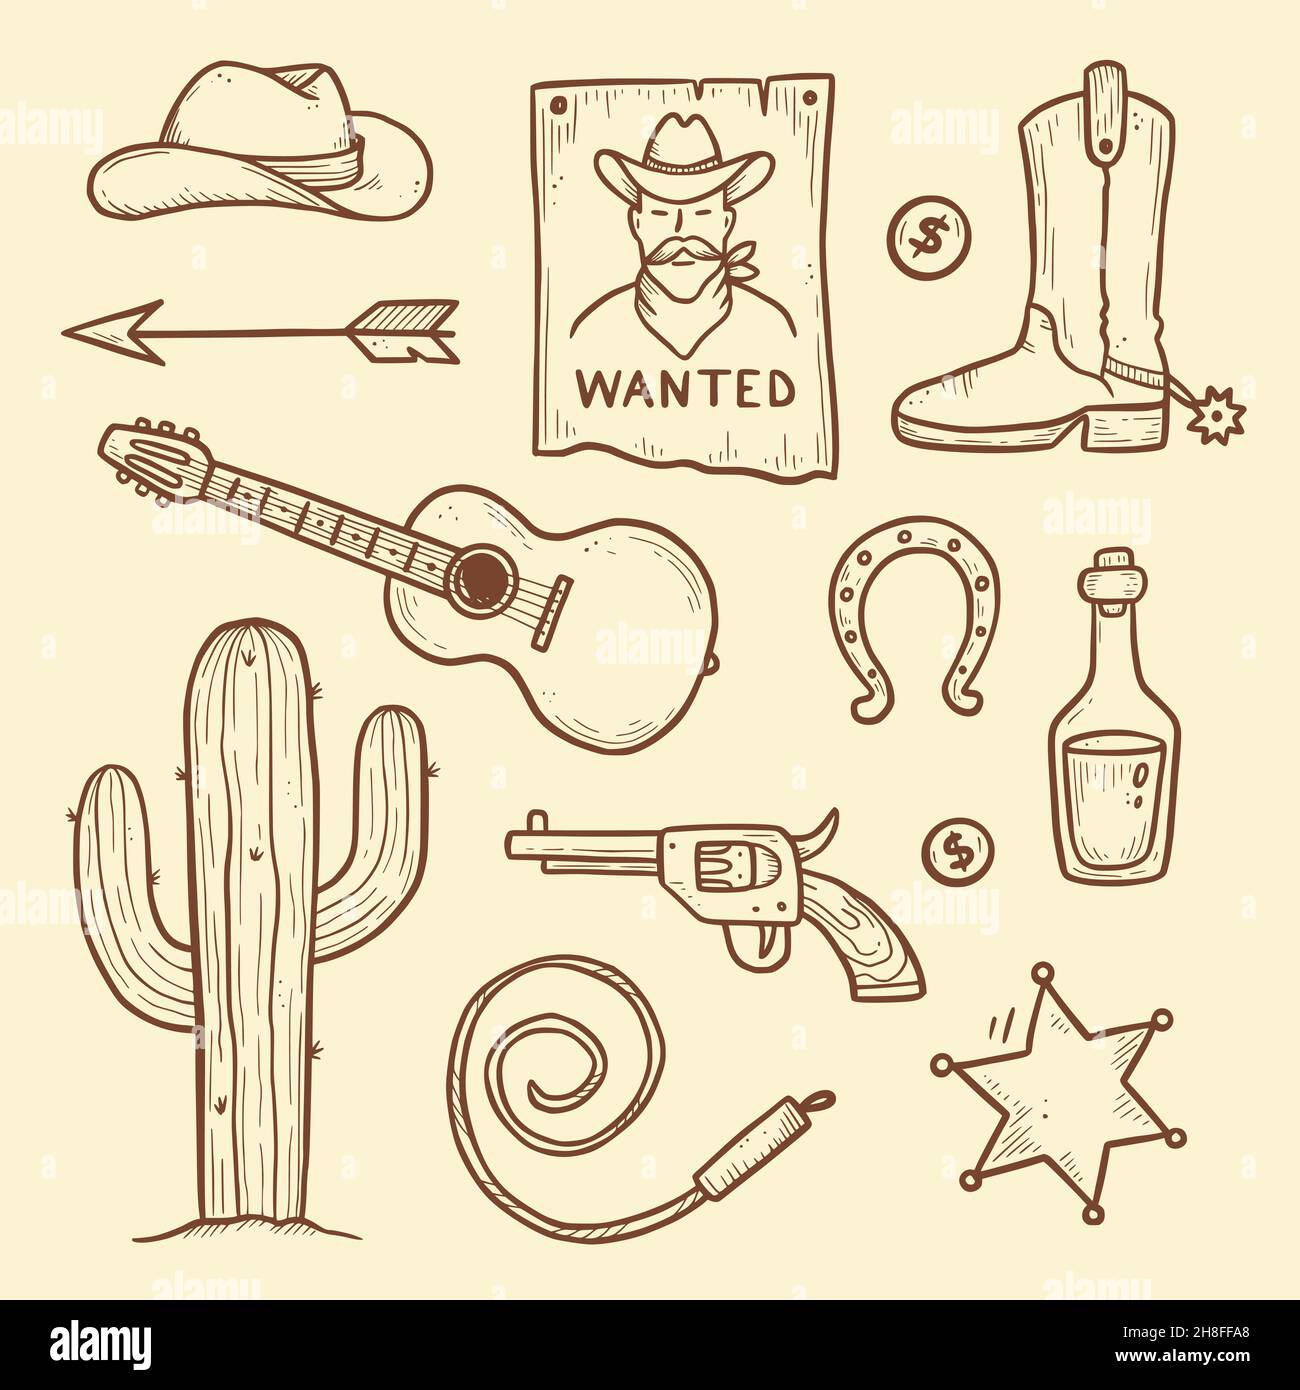 Cowboy western doodle set. Hand drawn sketch line style. Cowboy hat, cow skull, gun, cactus element. Wild west vector illustration. Stock Vector